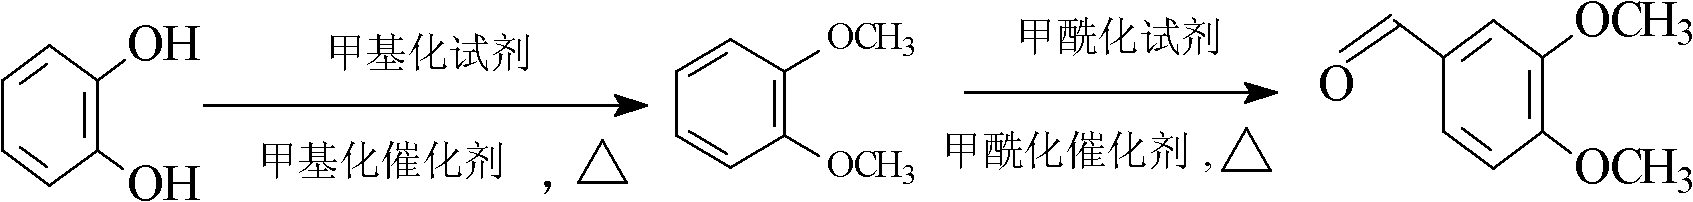 Method for synthesizing veratraldehyde